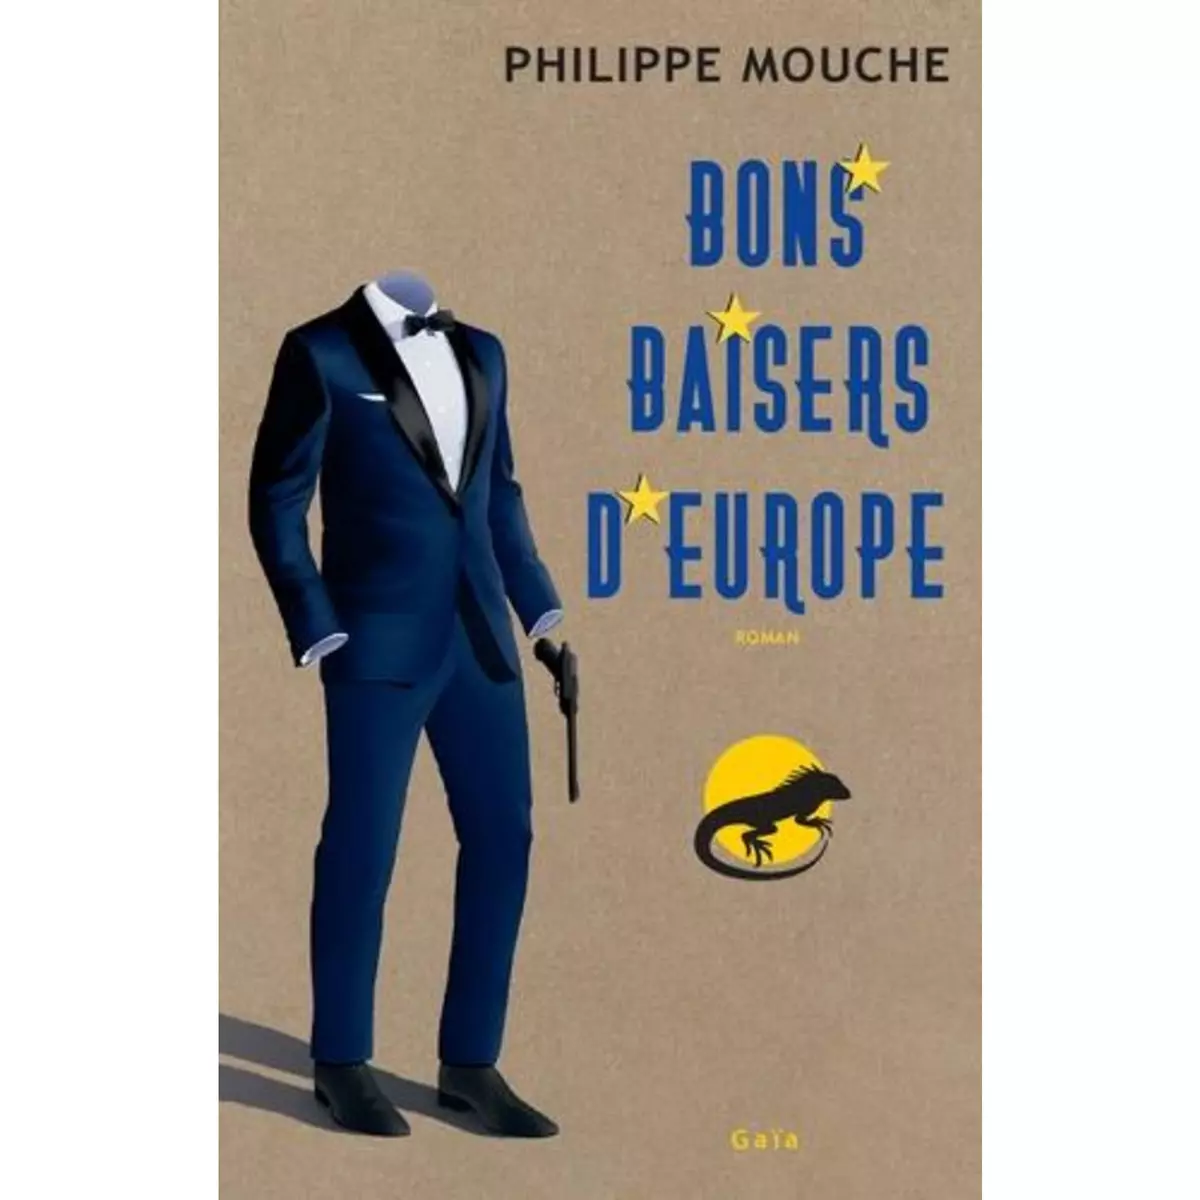  BONS BAISERS D'EUROPE, Mouche Philippe